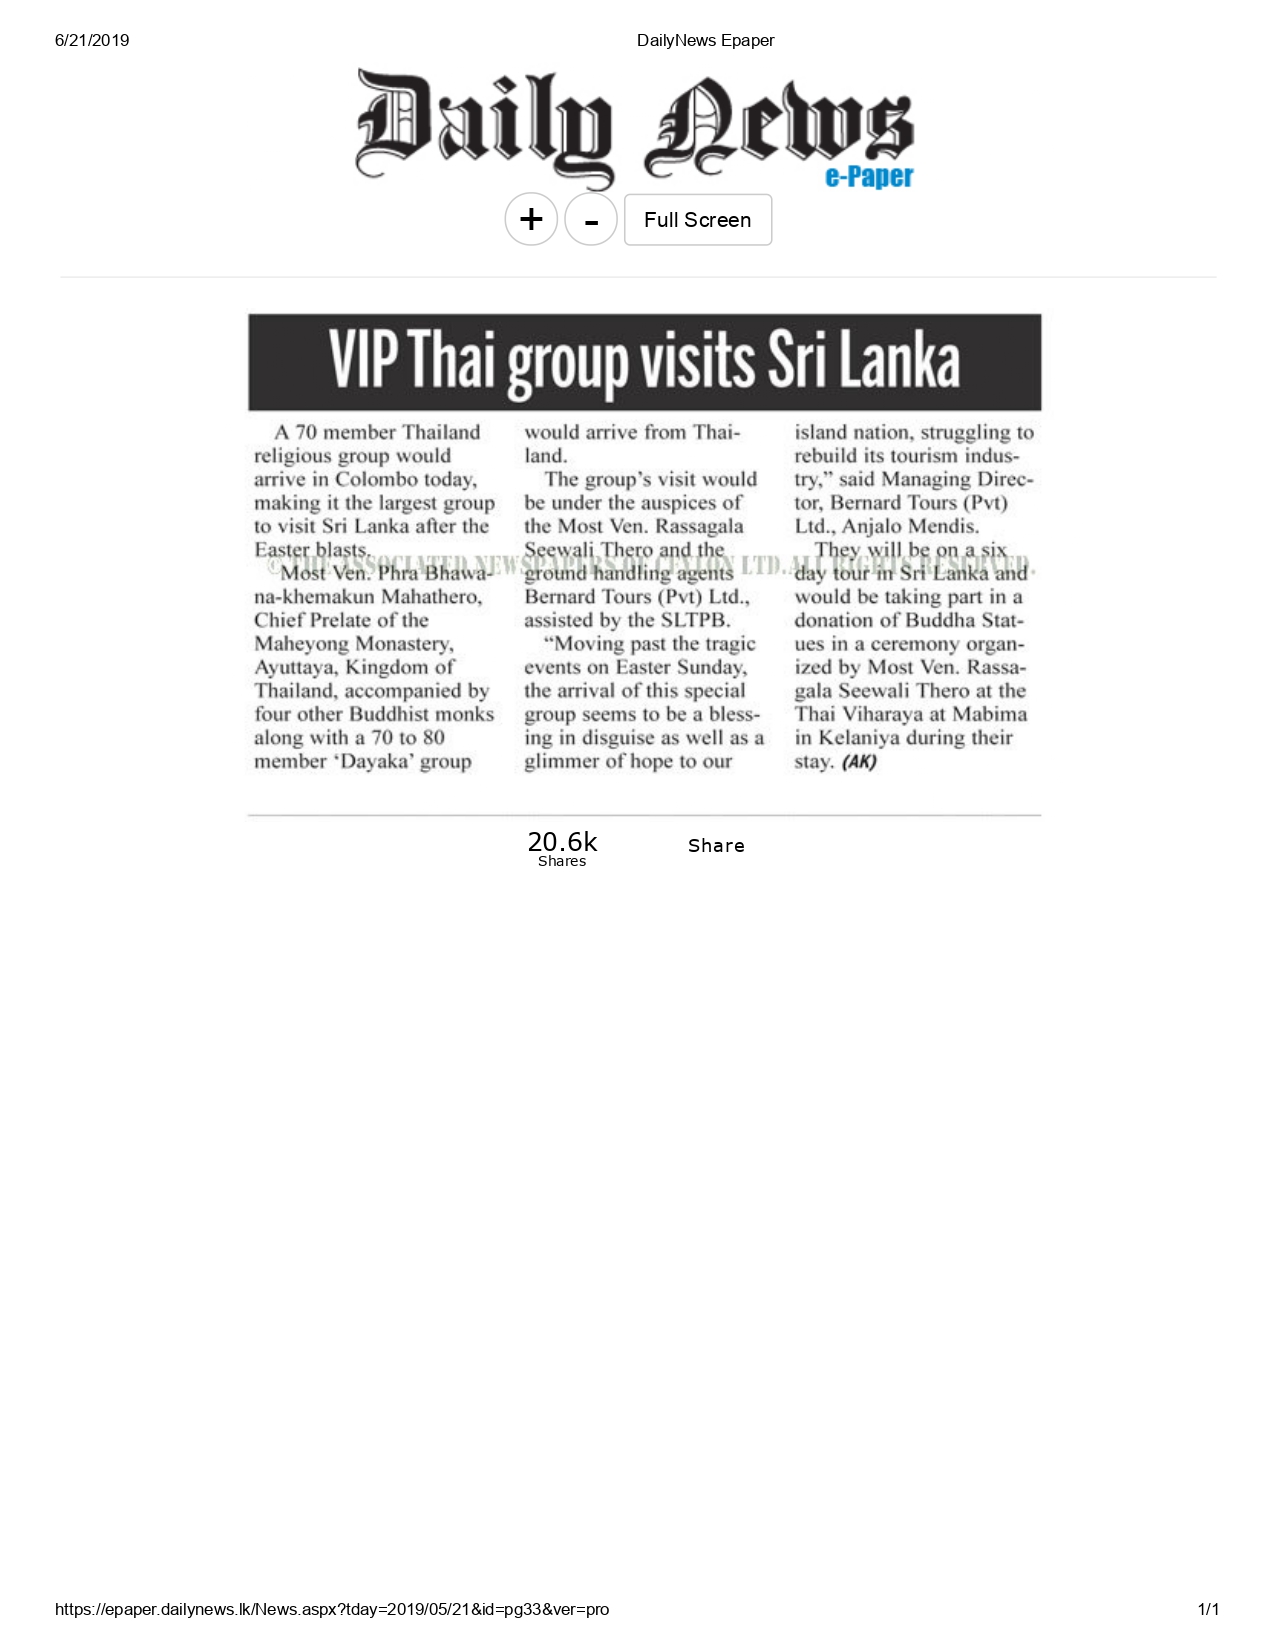 VIP Thai group visits Sri Lanka